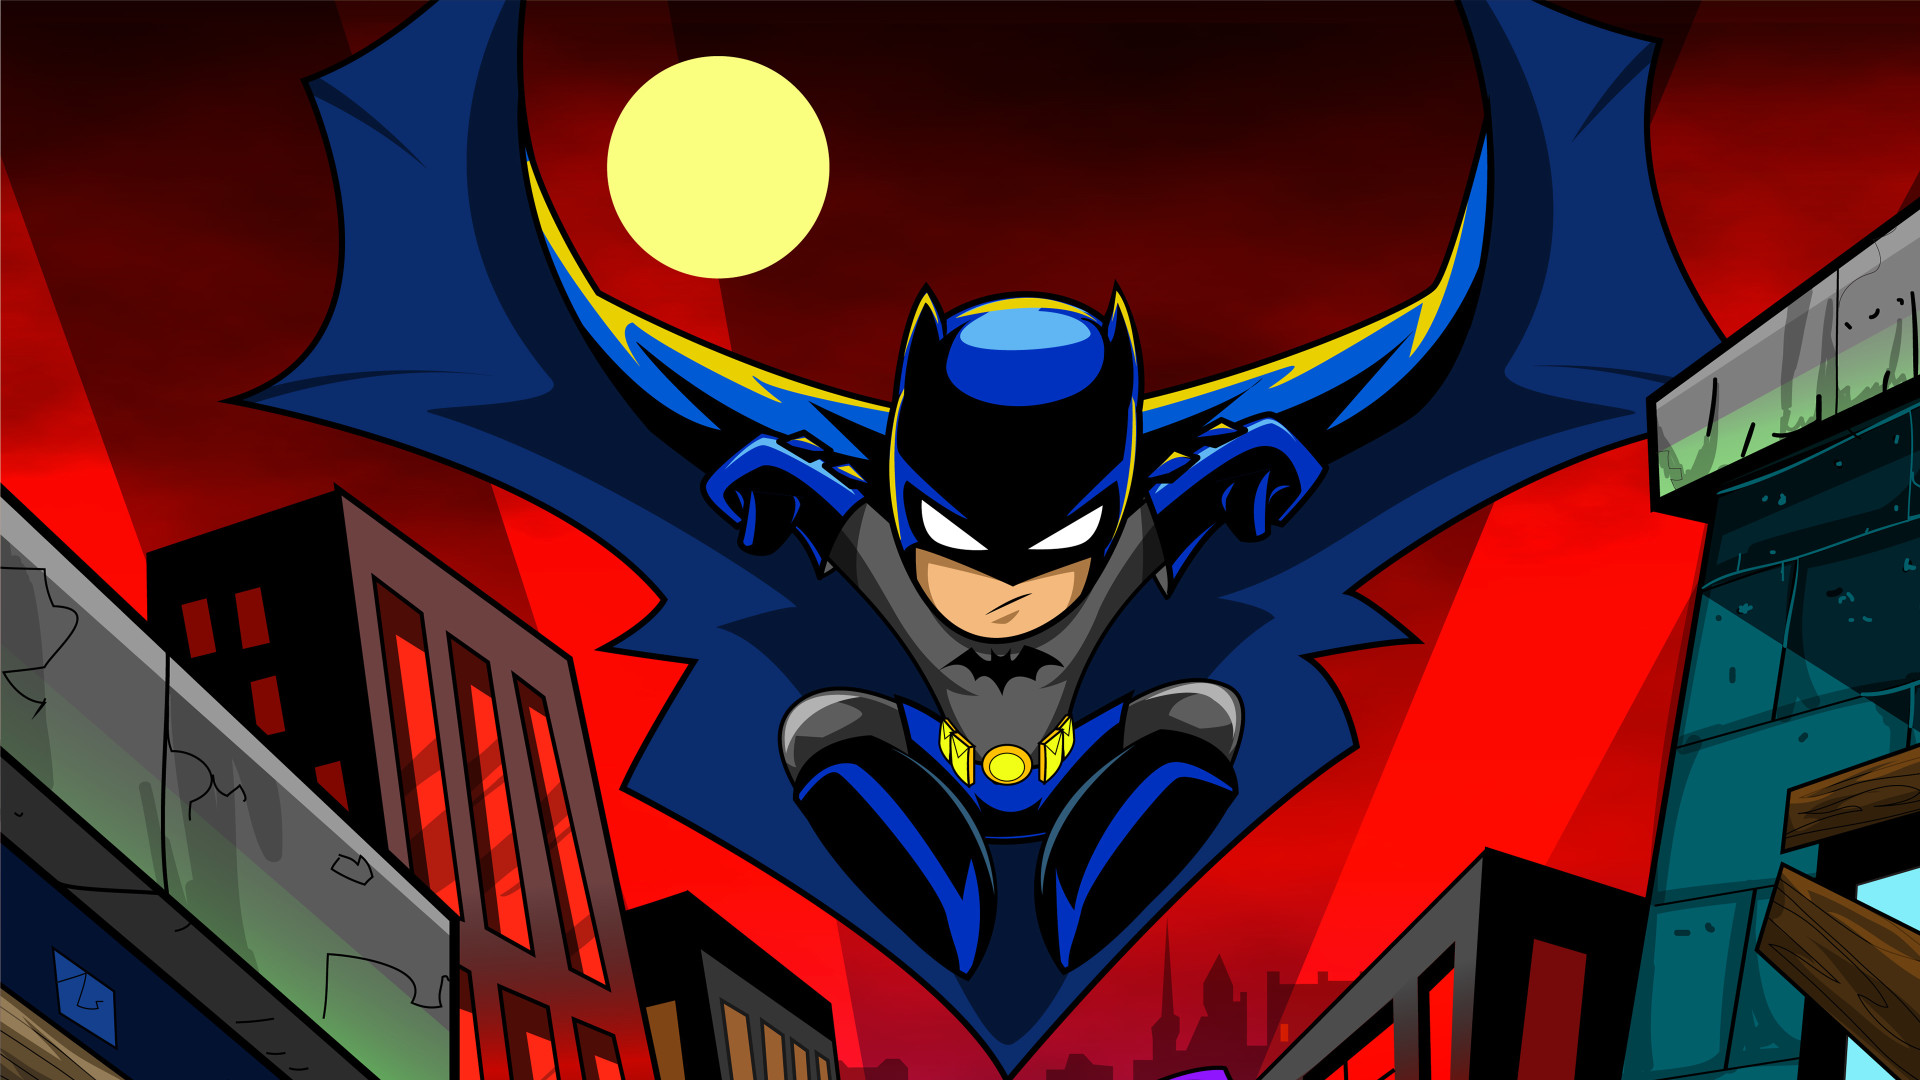 hd漫画の壁紙1080pフルダウンロード,架空の人物,スーパーヒーロー,フィクション,ヒーロー,バットマン